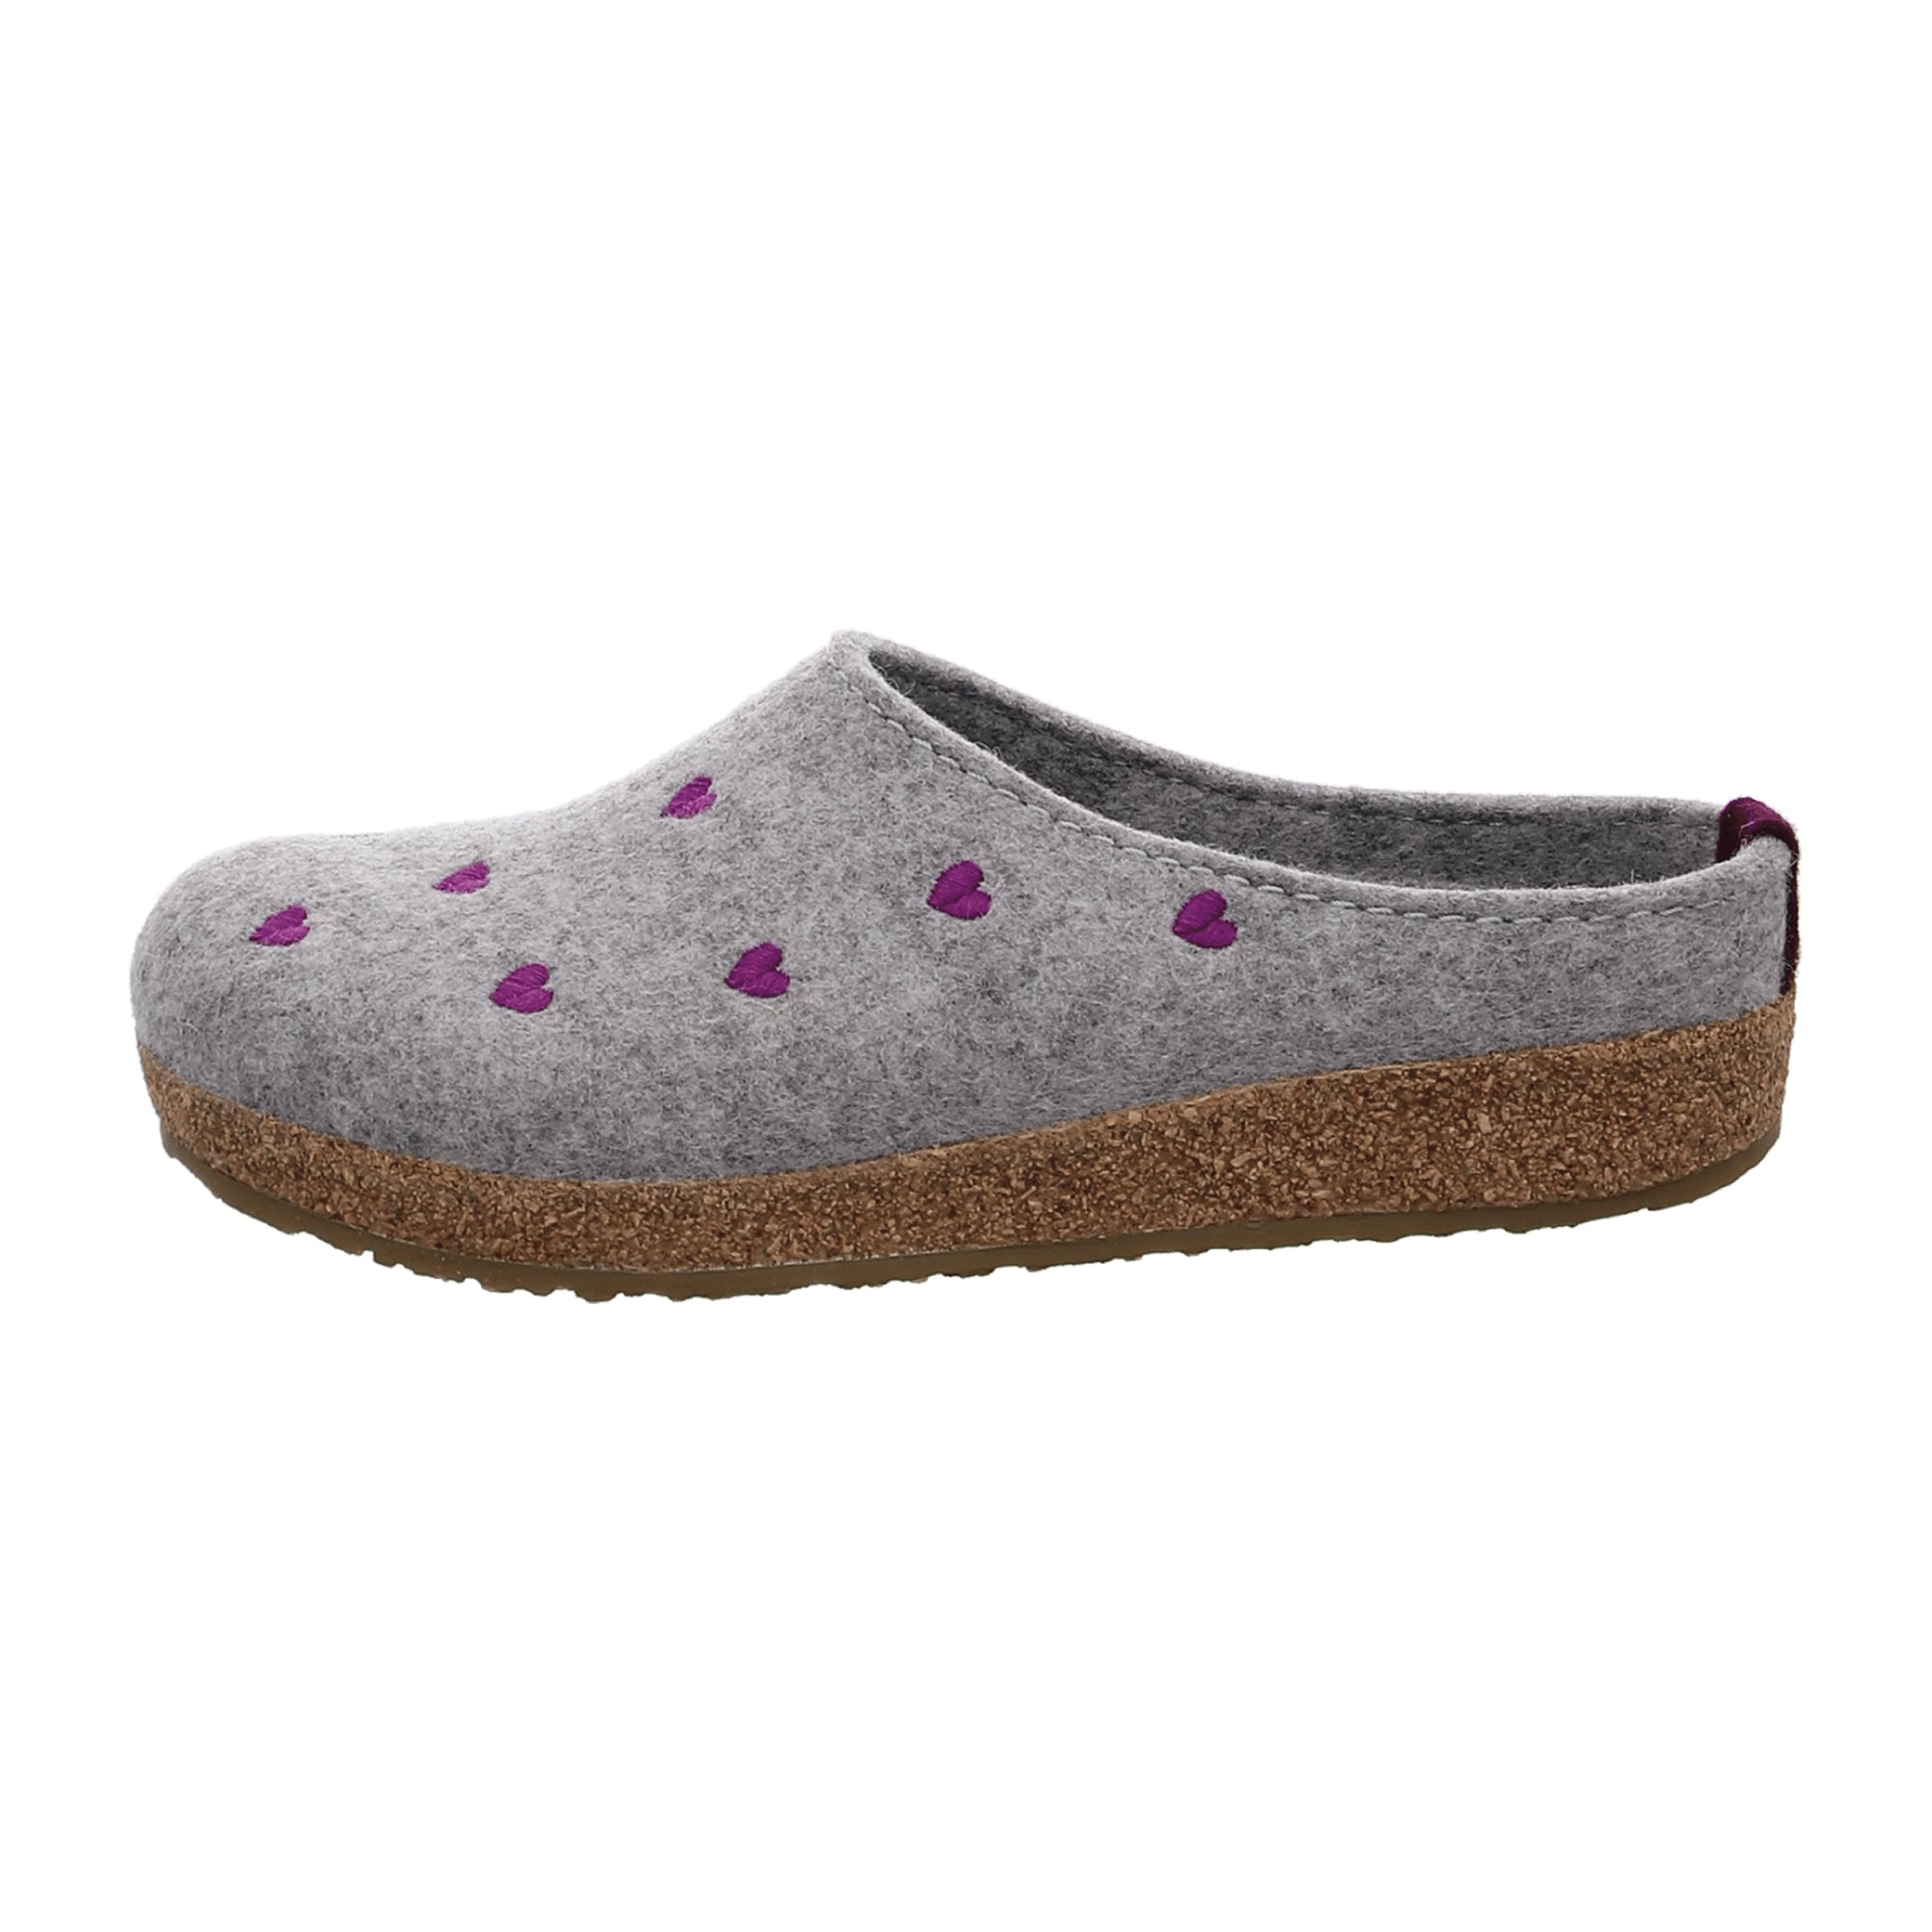 Haflinger 741031 Women's Stylish Gray Slippers - Comfort & Durability